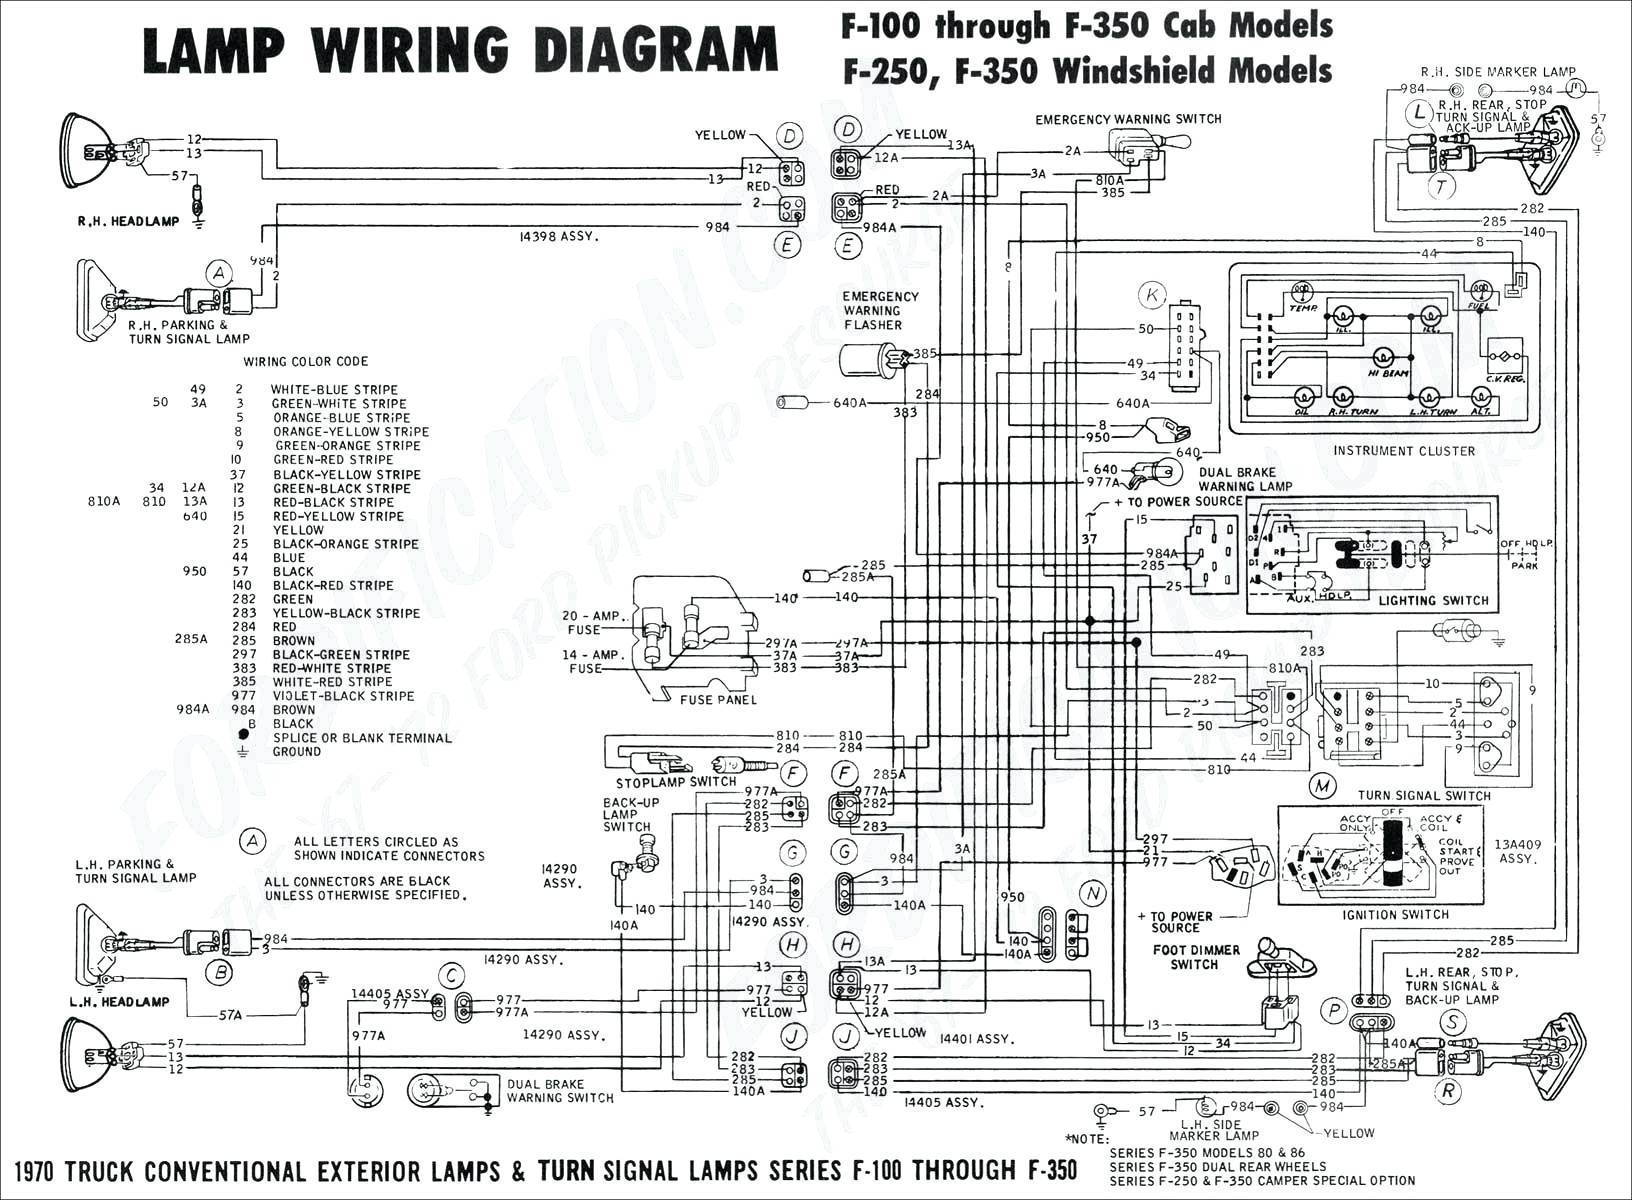 Briggs and Stratton 12 Hp Engine Diagram Briggs and Stratton Ignition System Diagram Wiring Diagram Paper Of Briggs and Stratton 12 Hp Engine Diagram